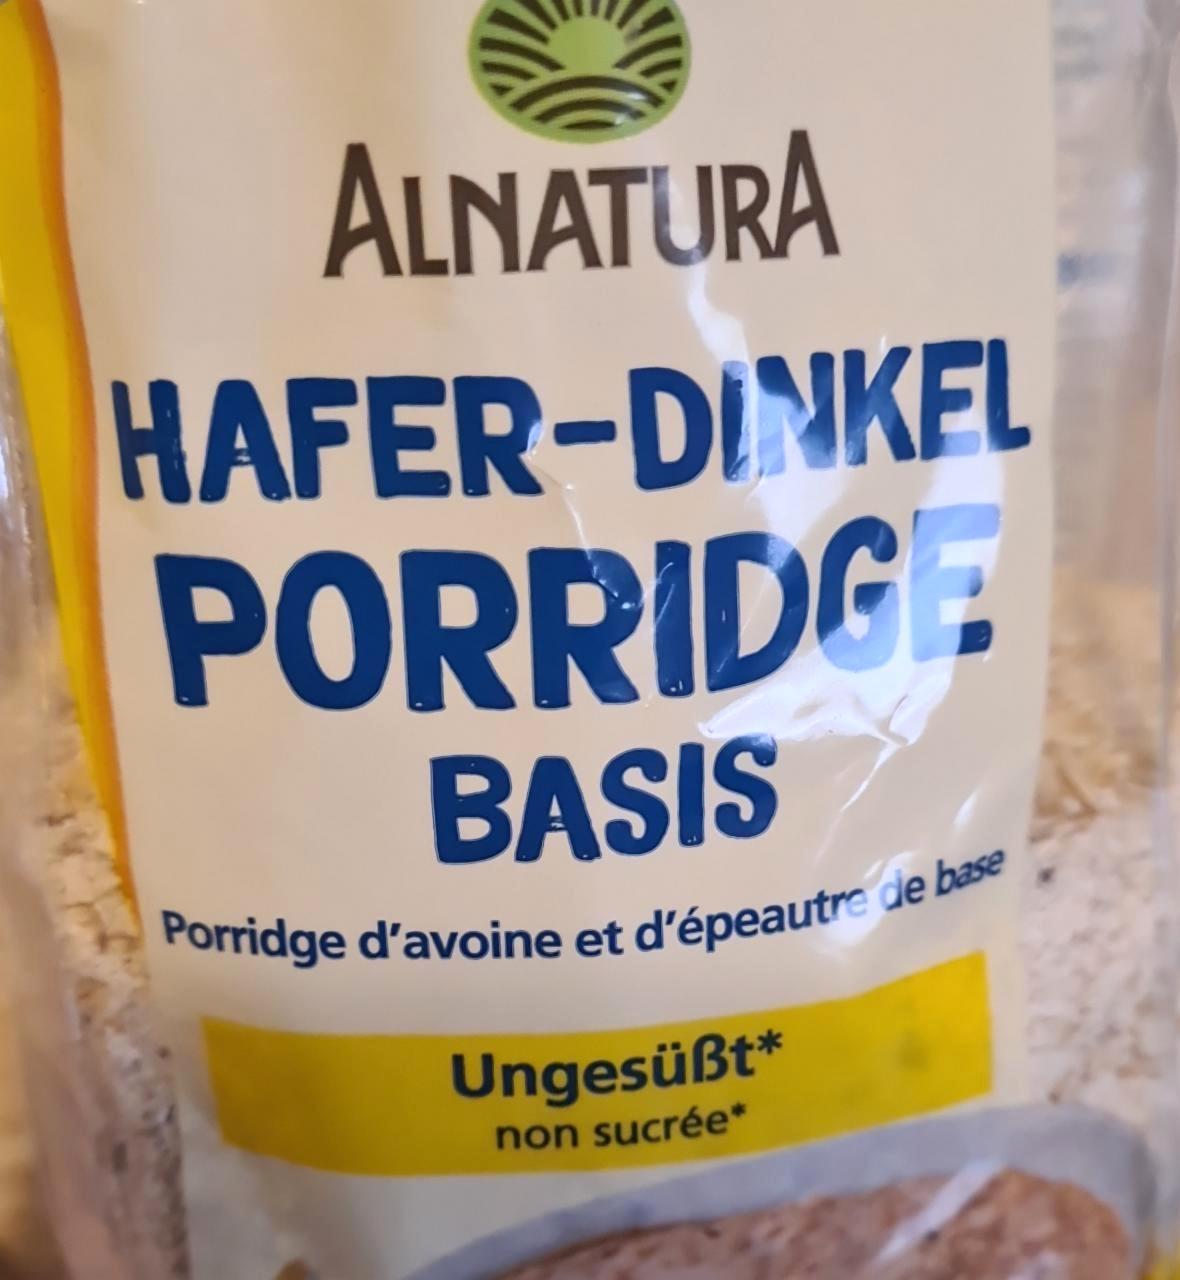 Képek - Hafer-Dinkel Porridge Basis Alnatura